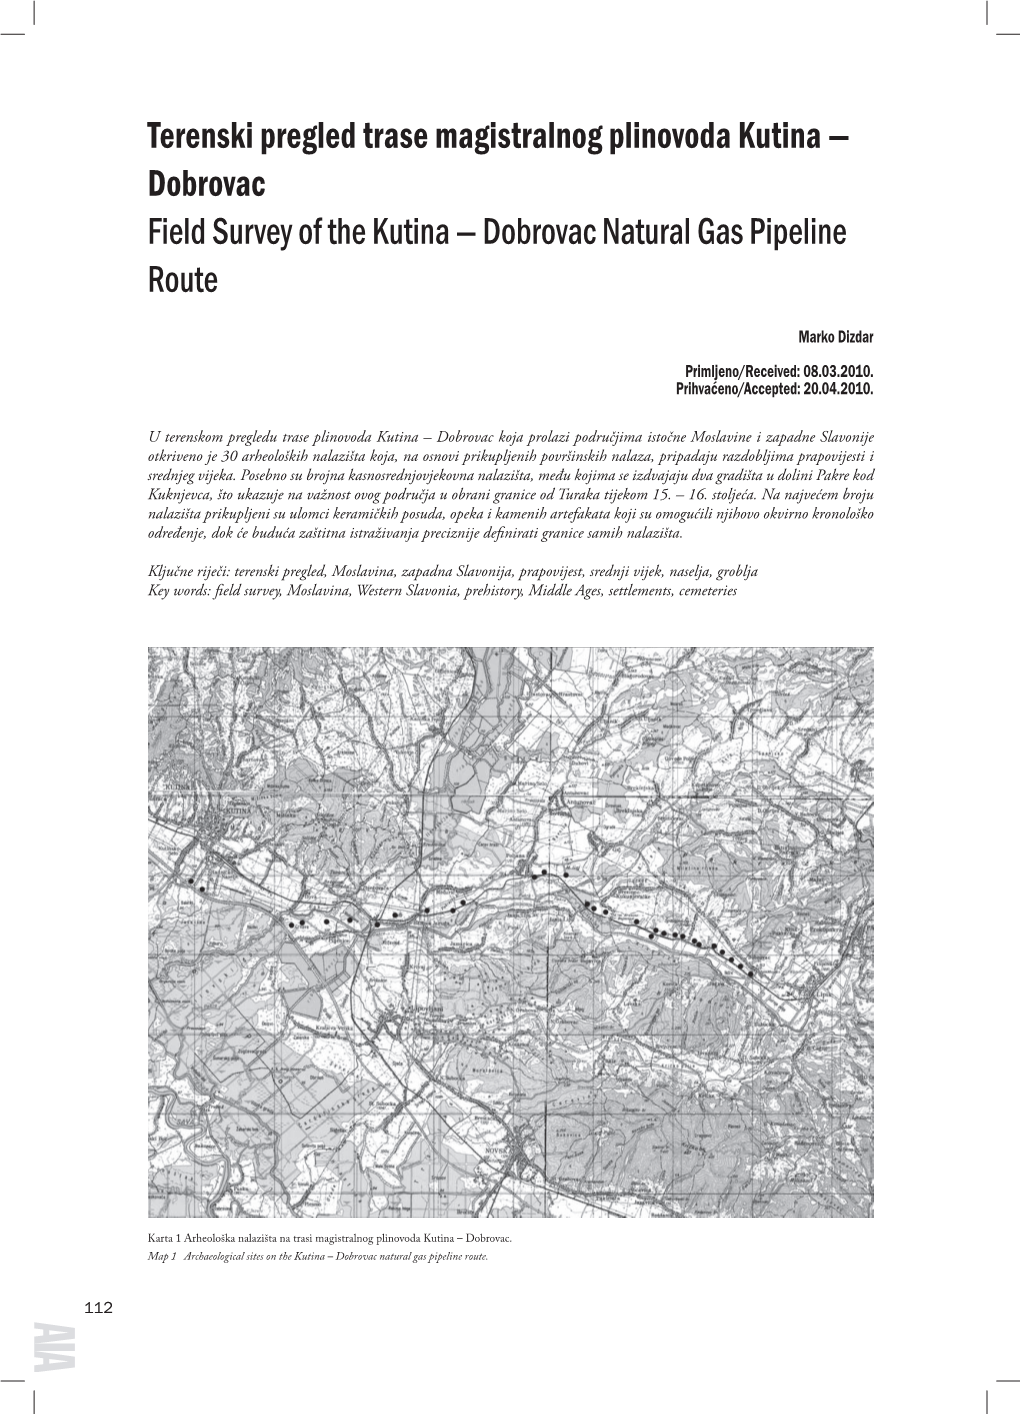 Terenski Pregled Trase Magistralnog Plinovoda Kutina — Dobrovac Field Survey of the Kutina — Dobrovac Natural Gas Pipeline Route